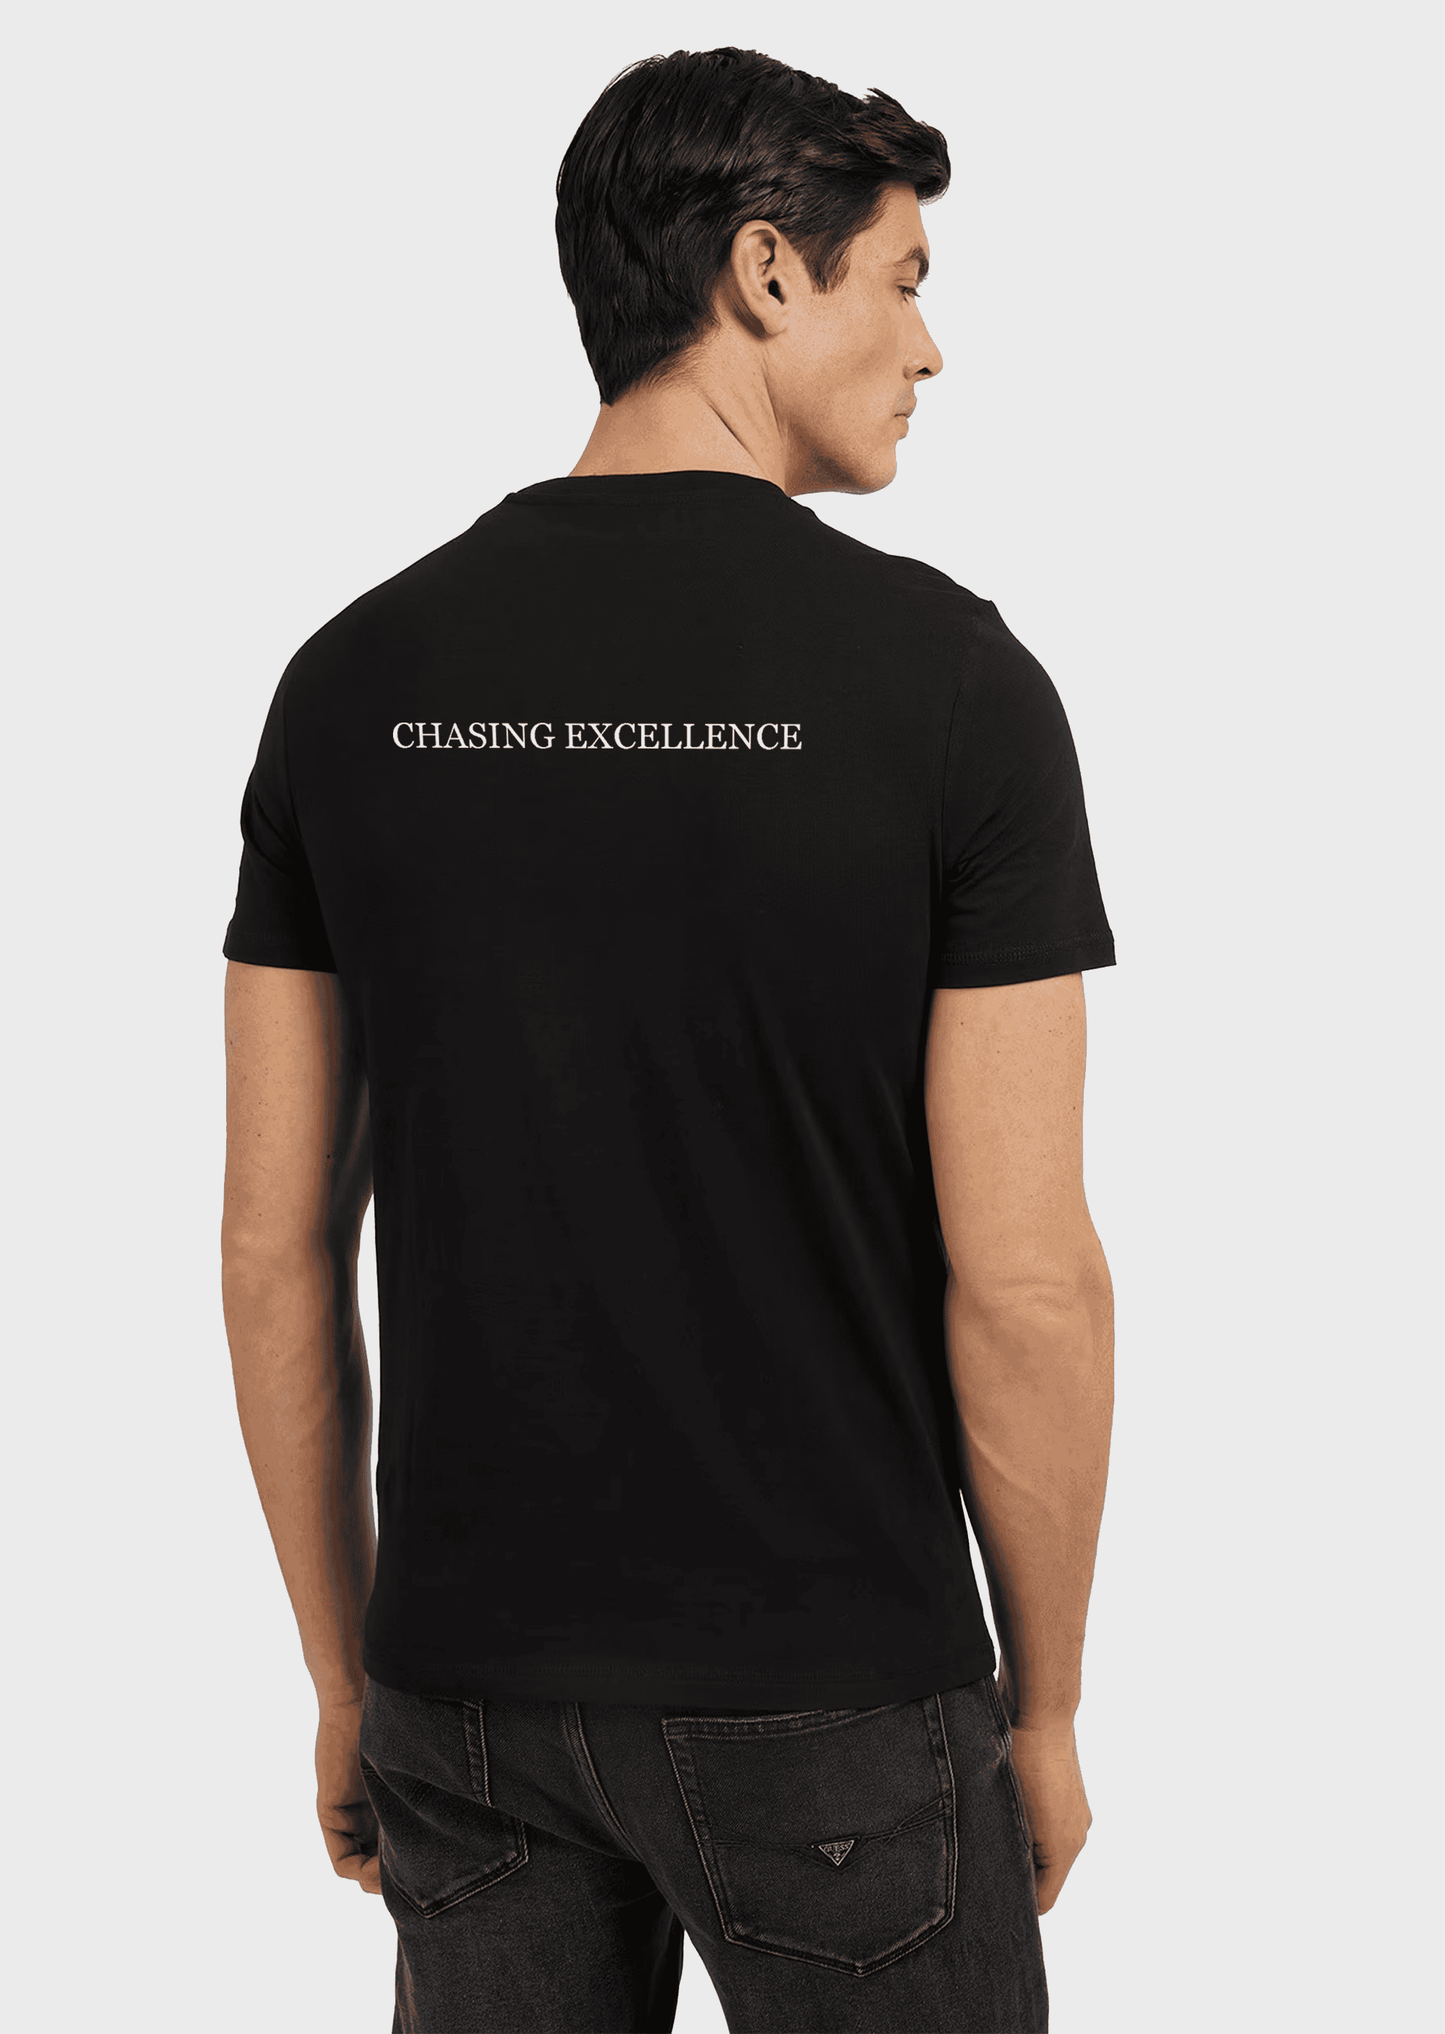 The Virtus T-Shirt Store – Virtus Apparel